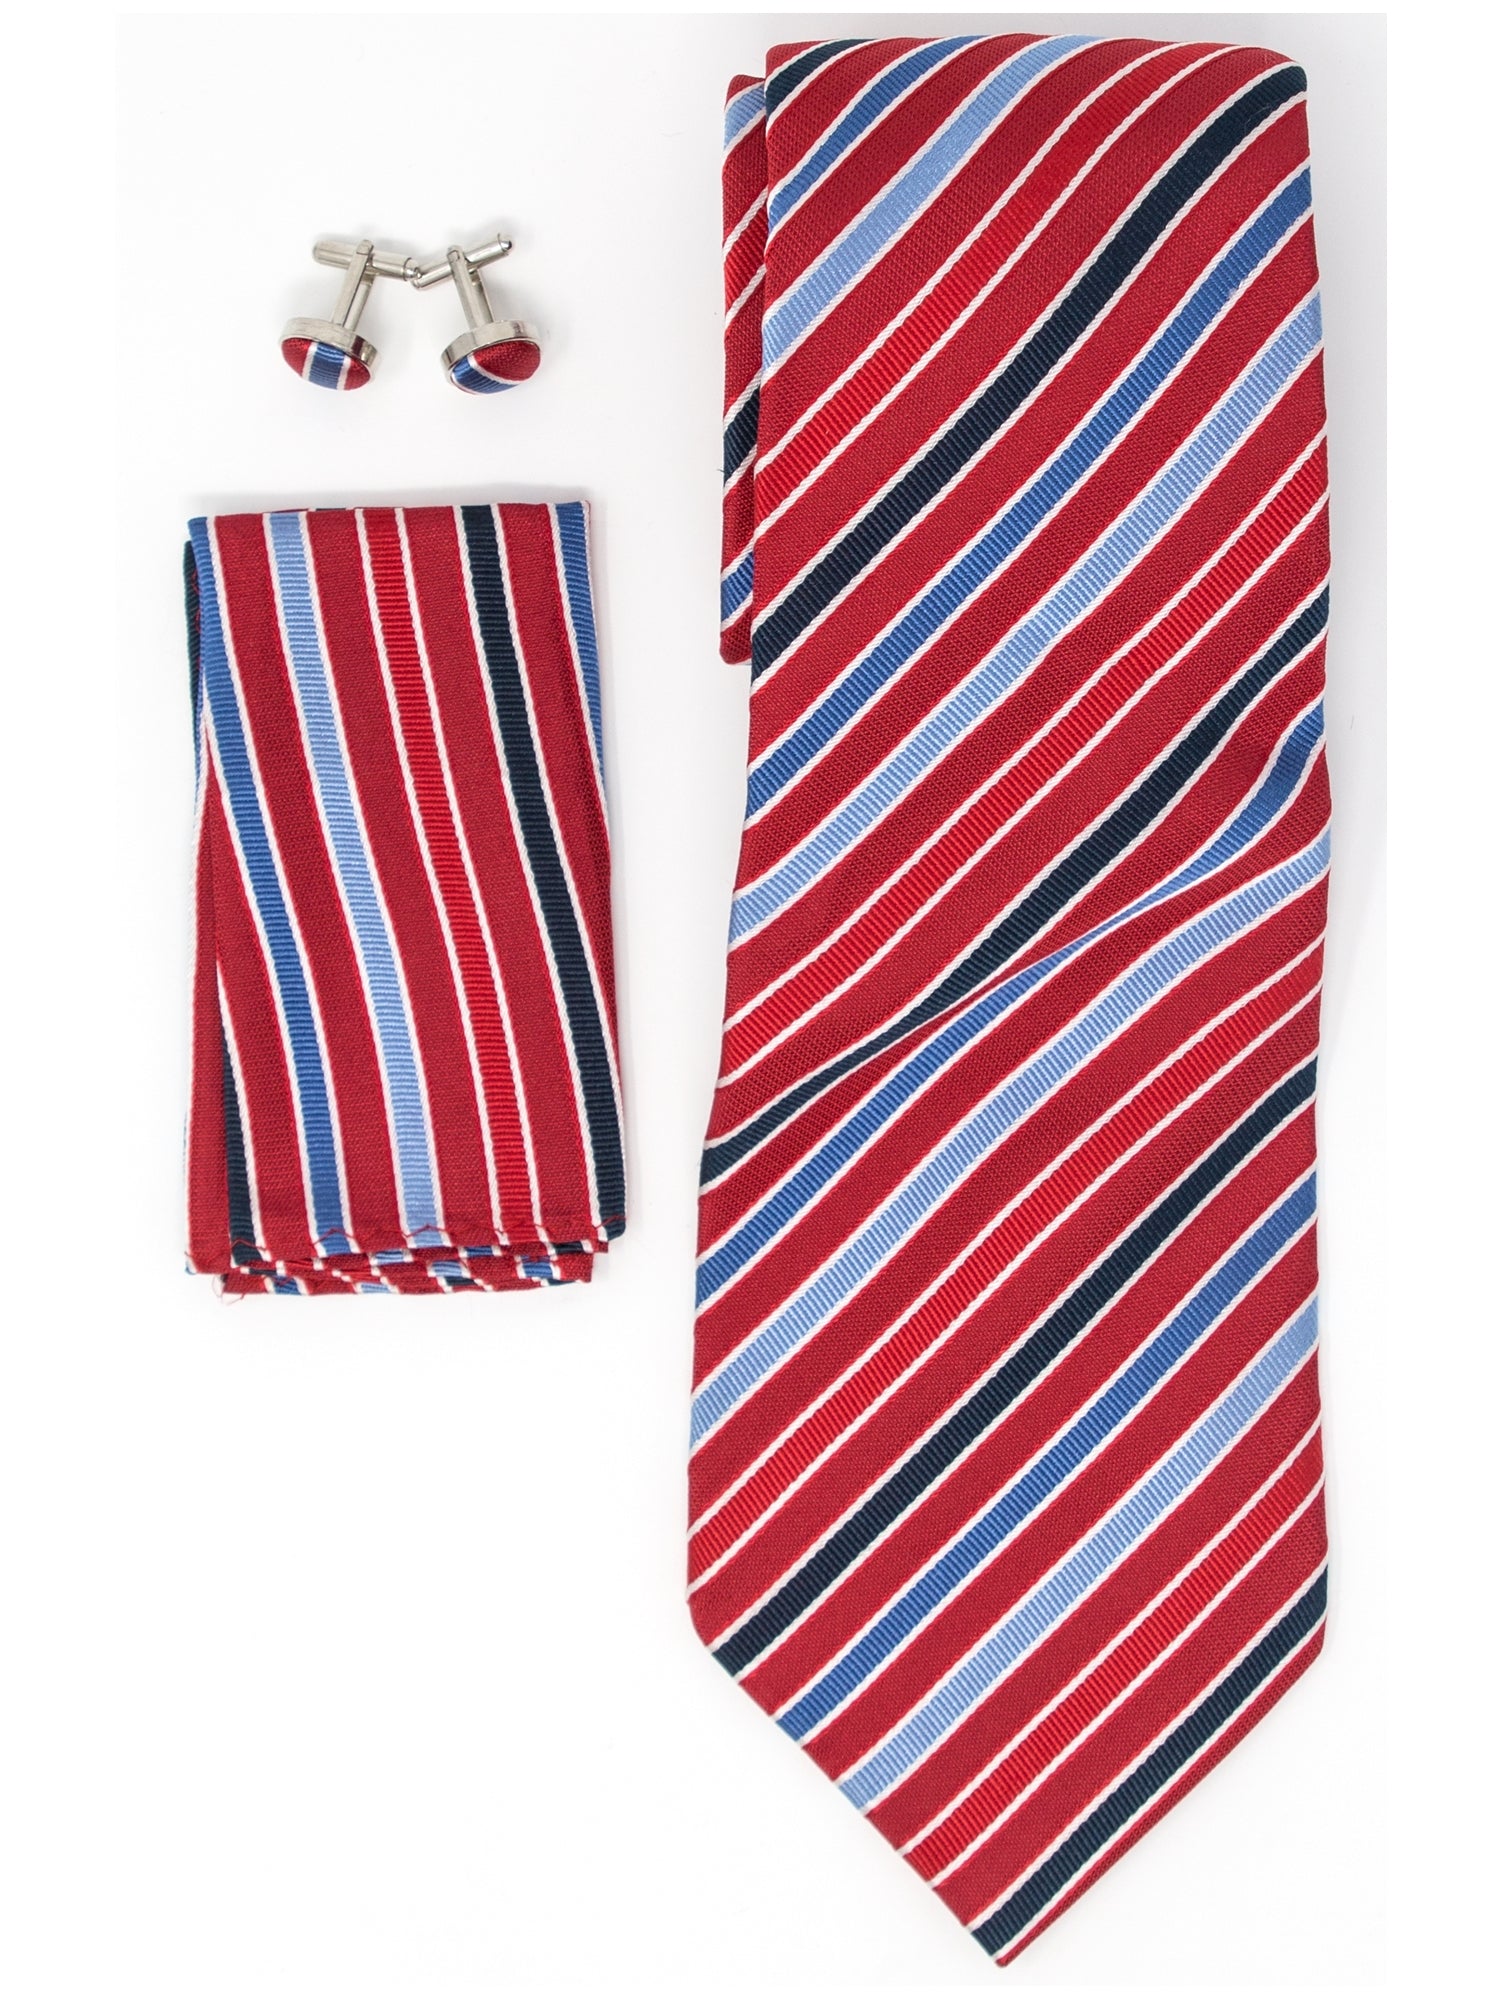 Men's Silk Neck Tie Set Cufflinks & Hanky Collection Neck Tie TheDapperTie Red, White And Navy Stripes Regular 